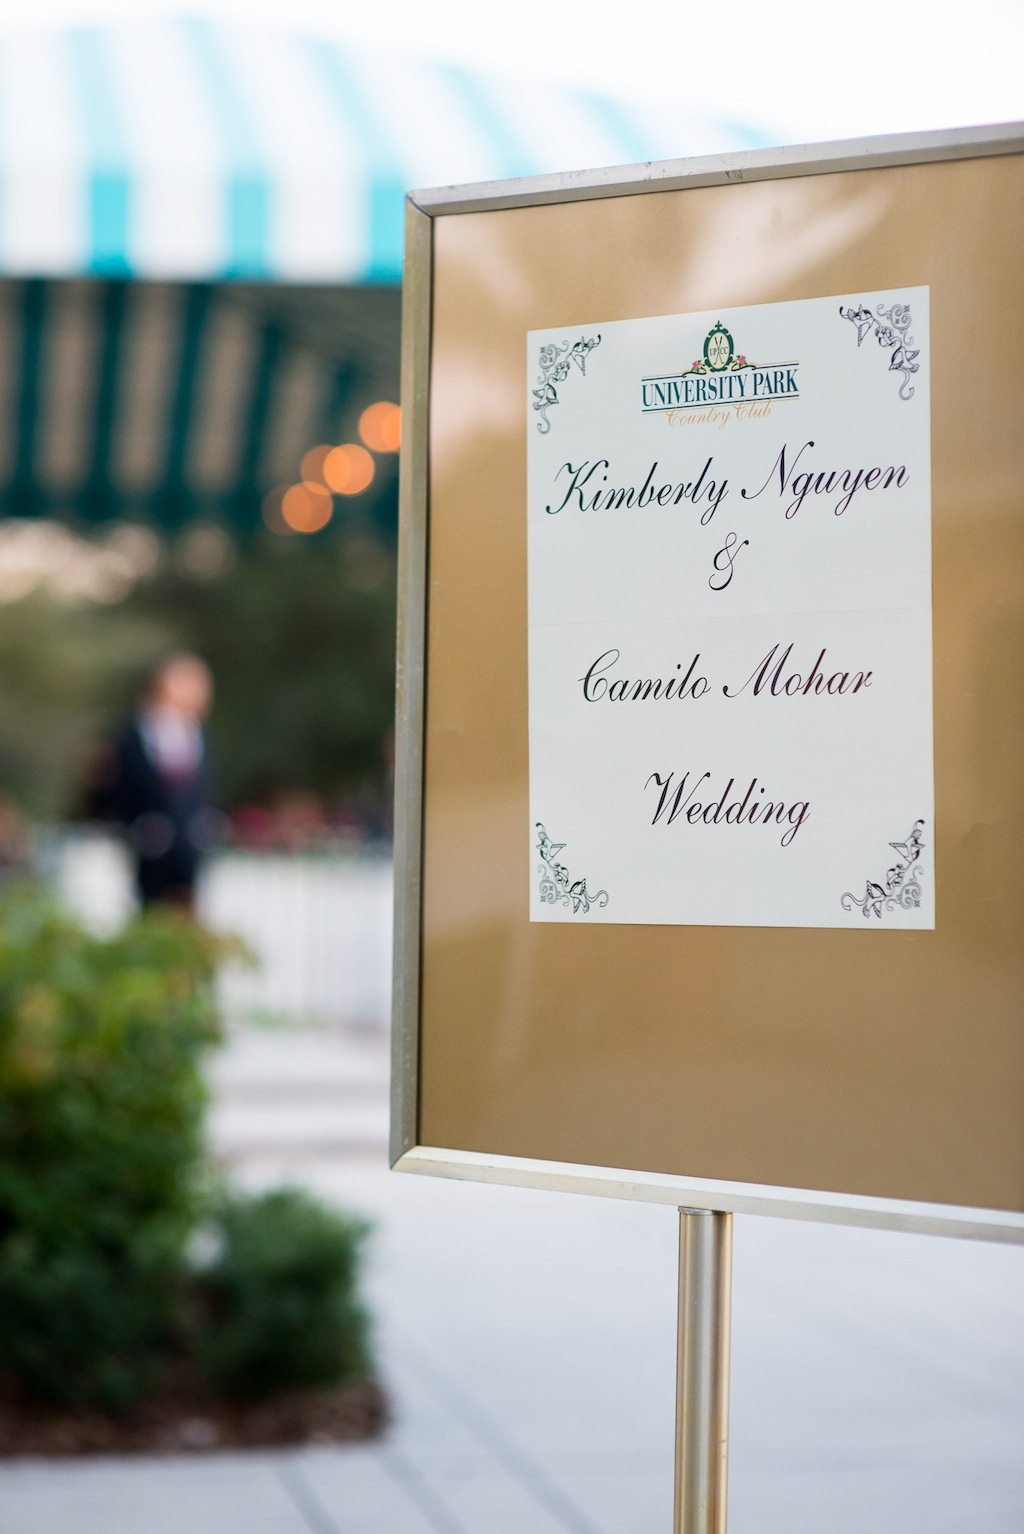 Sarasota Wedding - Elegant, Black Wedding at University Park Country Club - Sarasota Wedding Photographer Jeff Mason Photography (32)